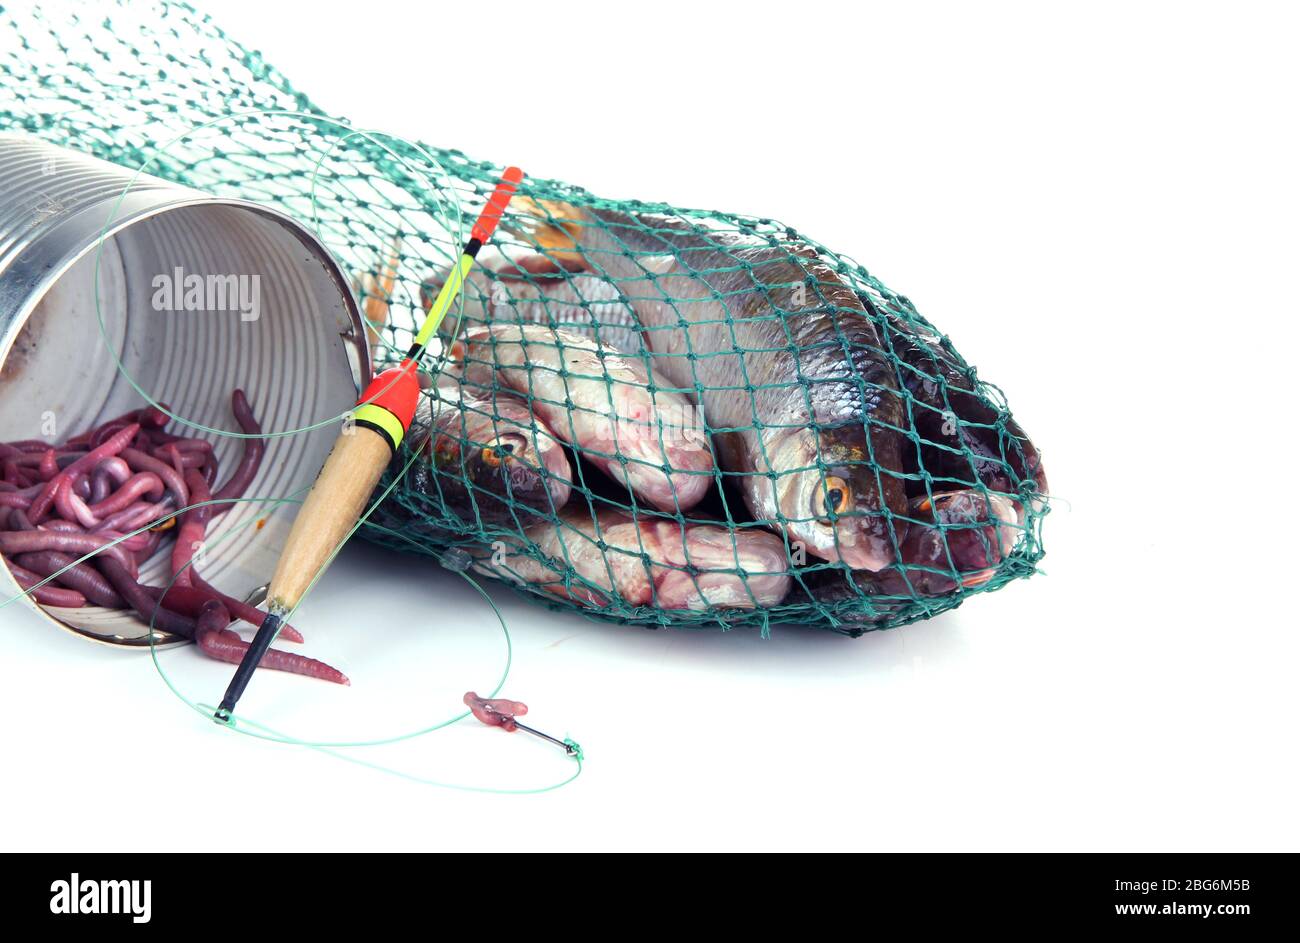 Illustration of fish caught in fishing net